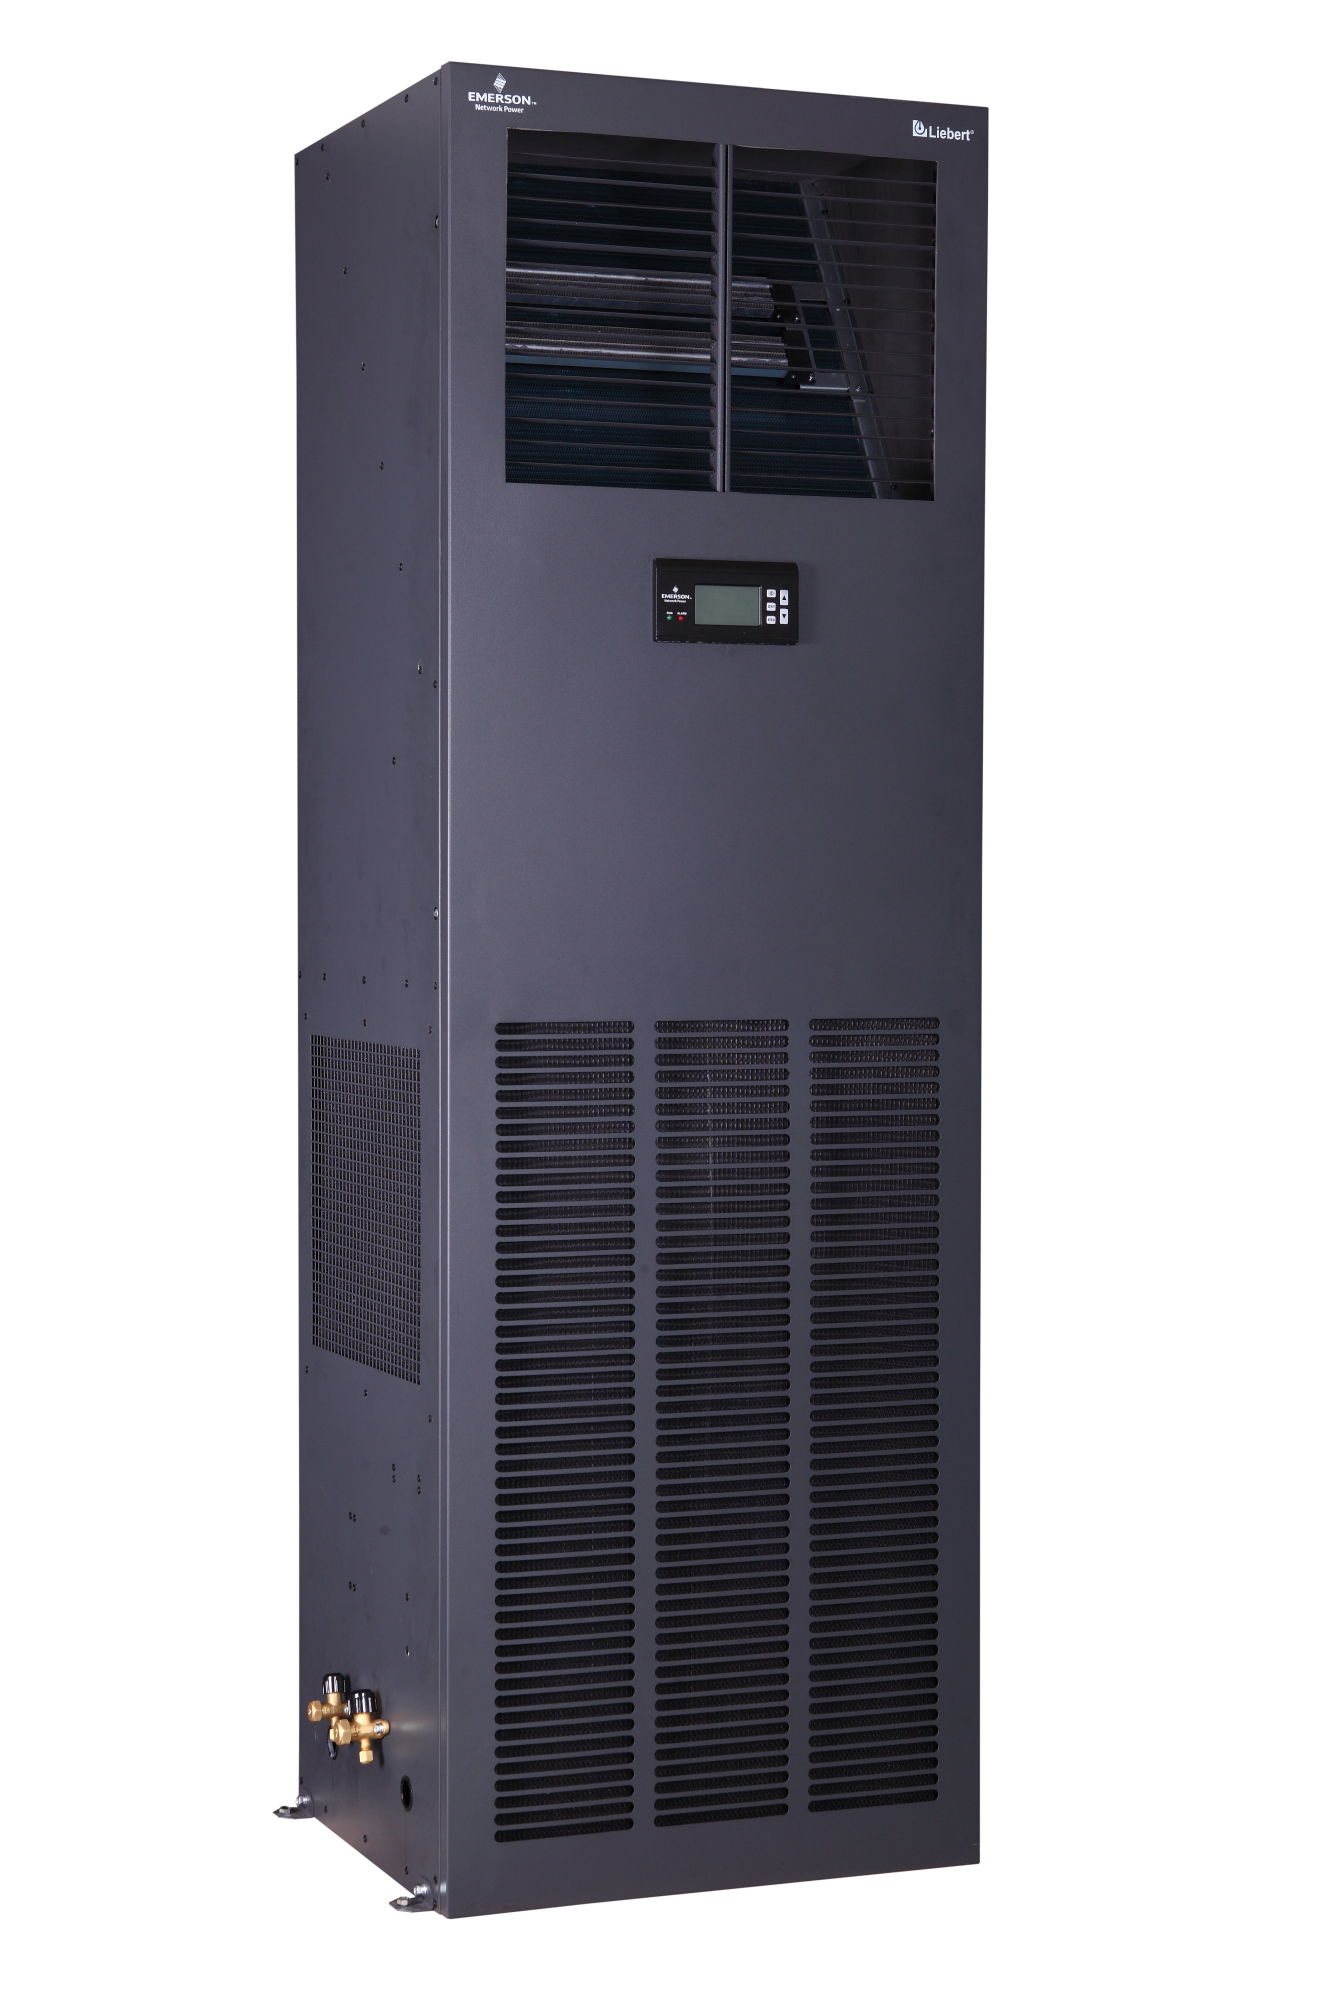  DataMate3000系列16kW风冷型机房专用空调 